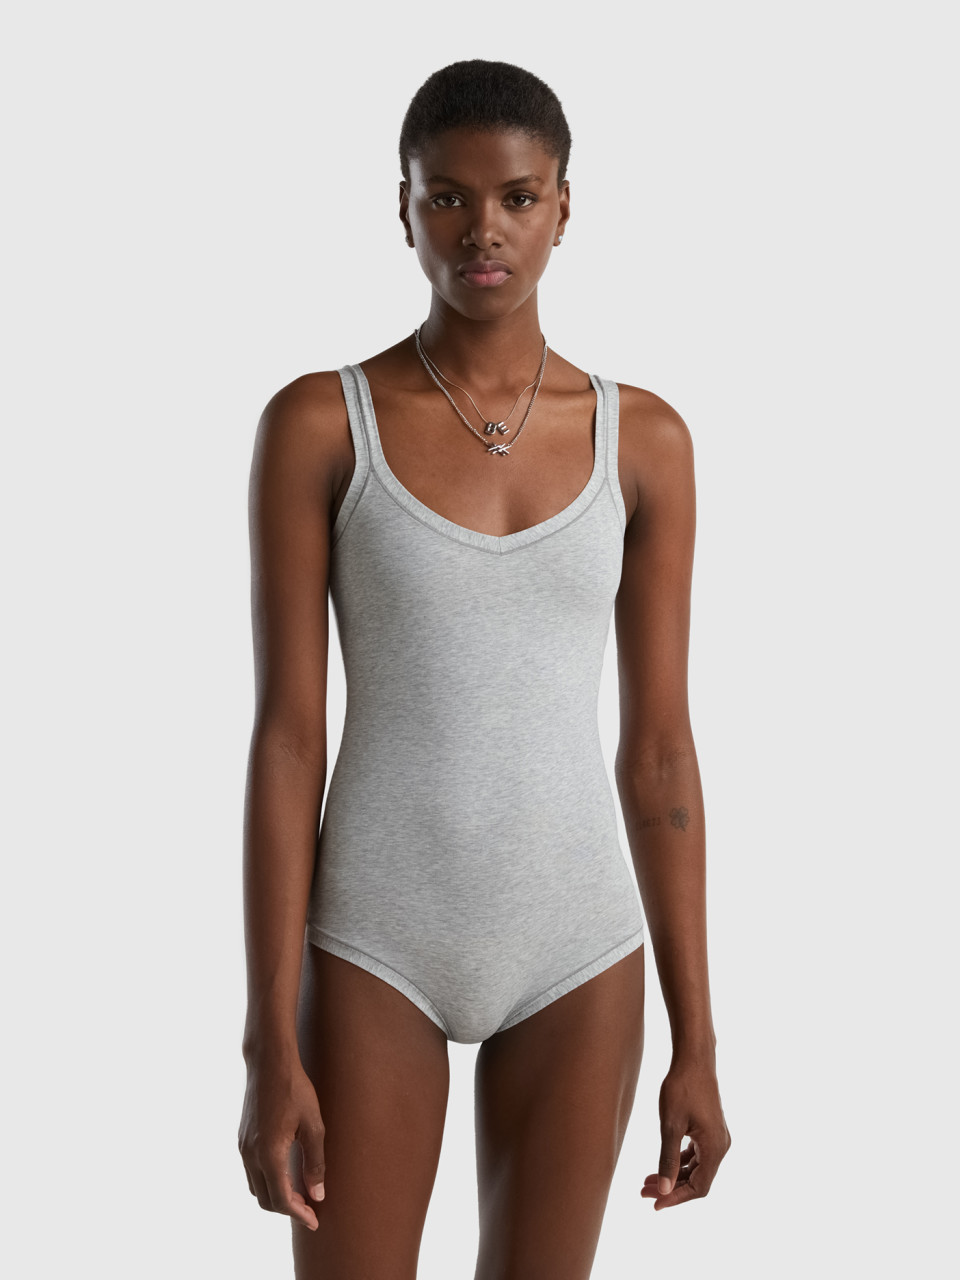 Benetton, Super Stretch Organic Cotton Bodysuit, Light Gray, Women